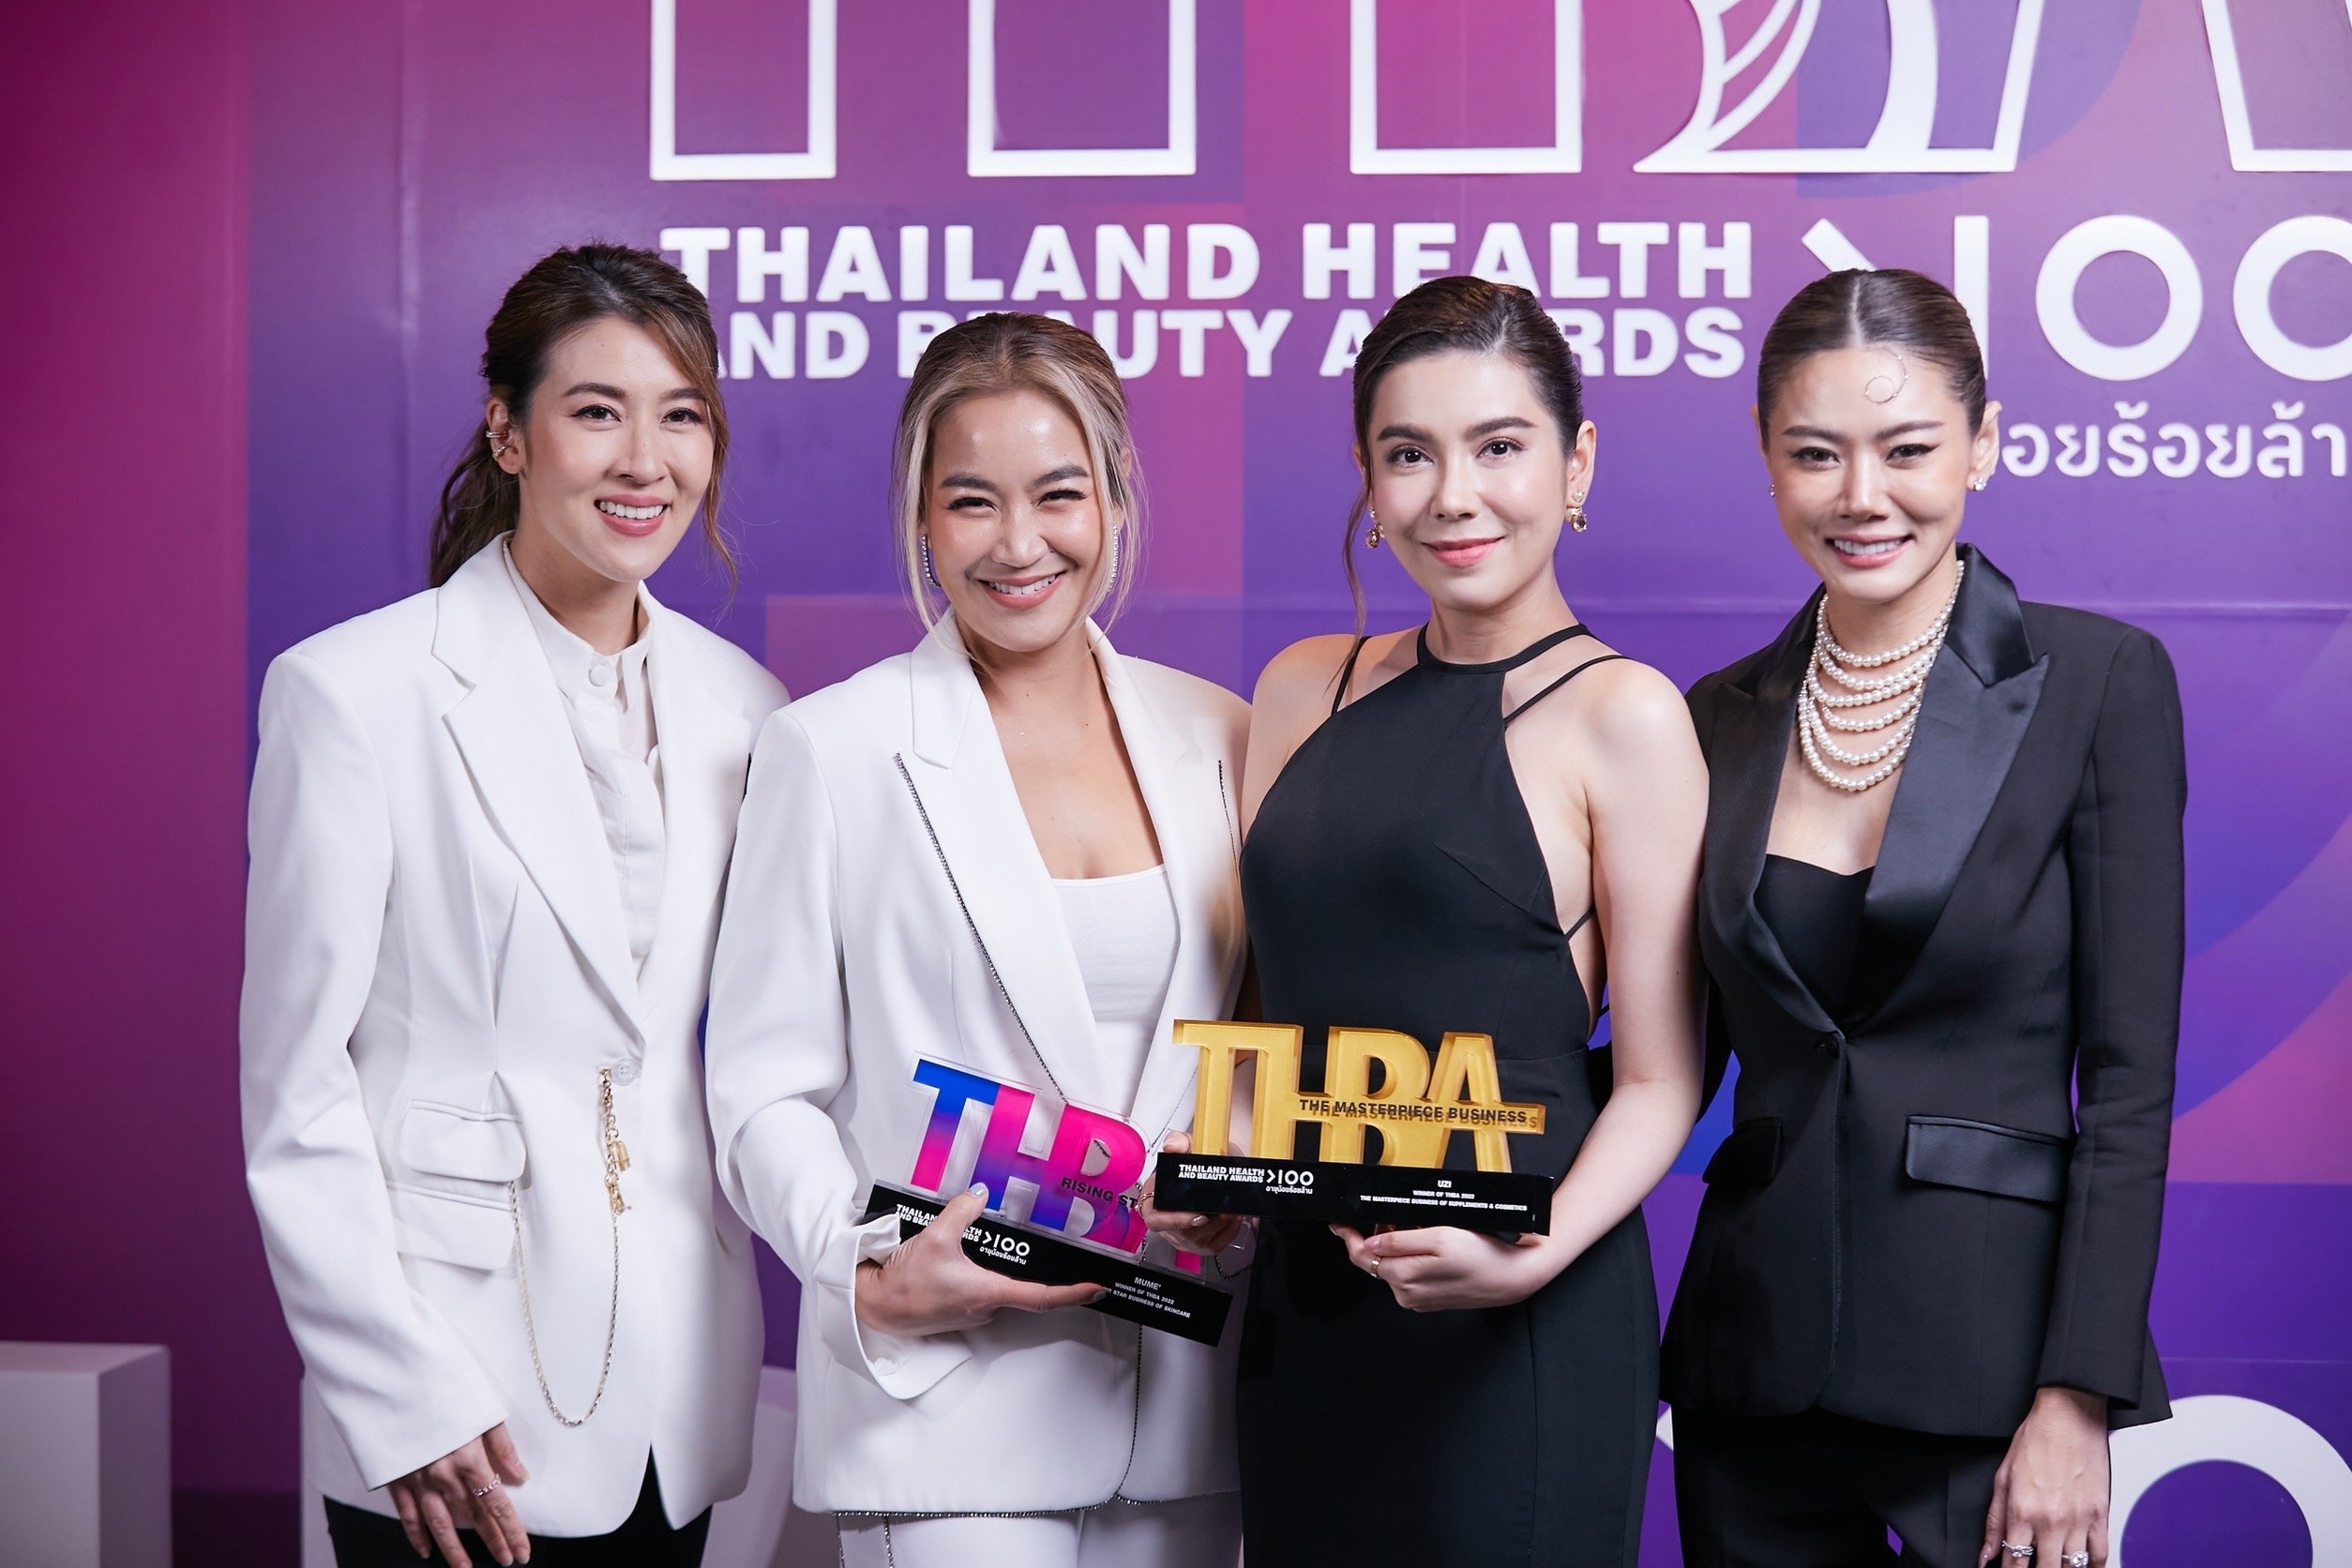 THAILAND HEALTH AND BEAUTY AWARDS 2022